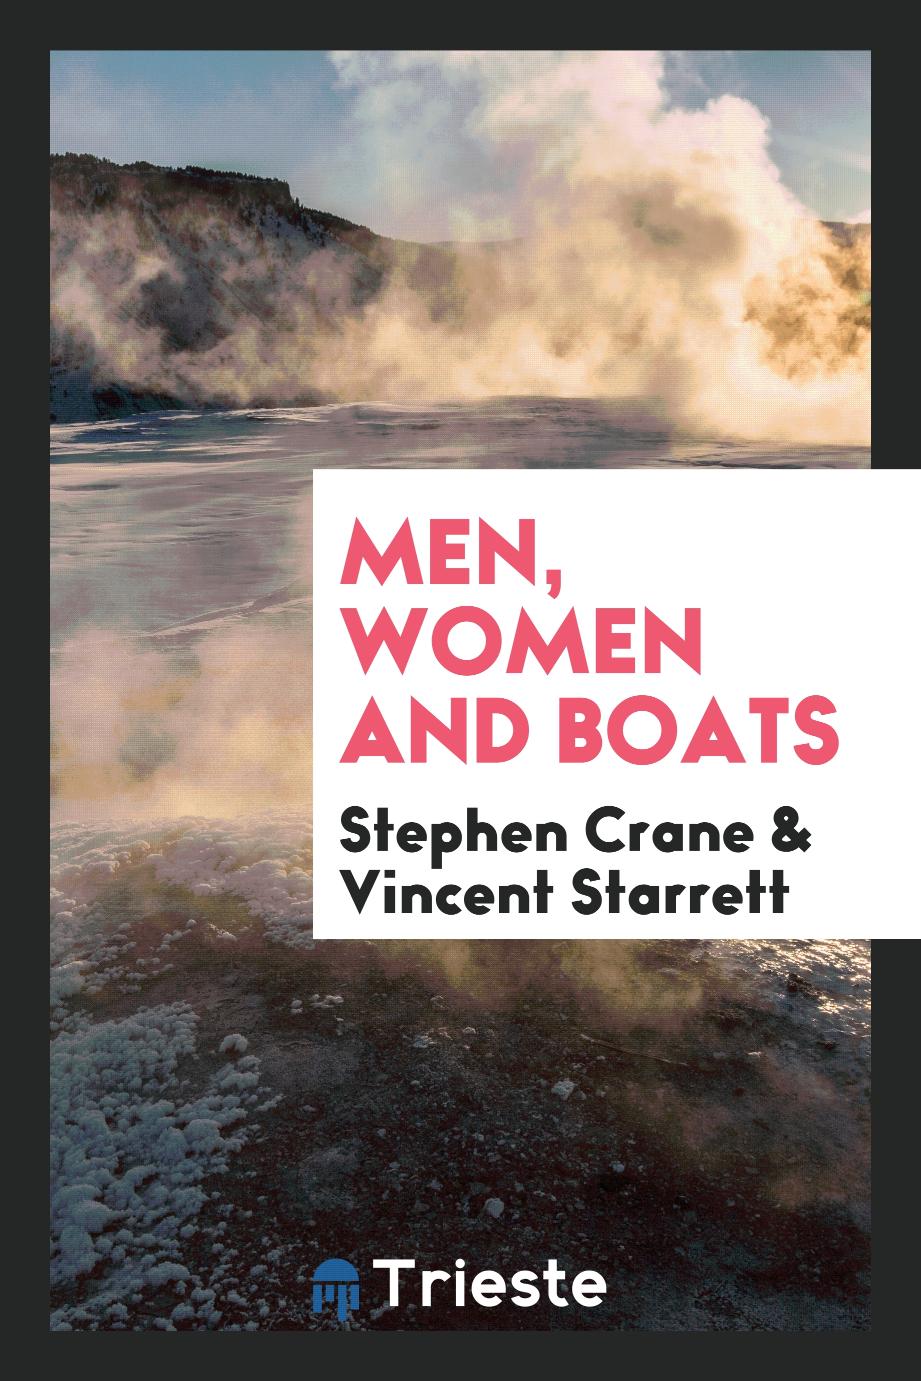 Men, women and boats